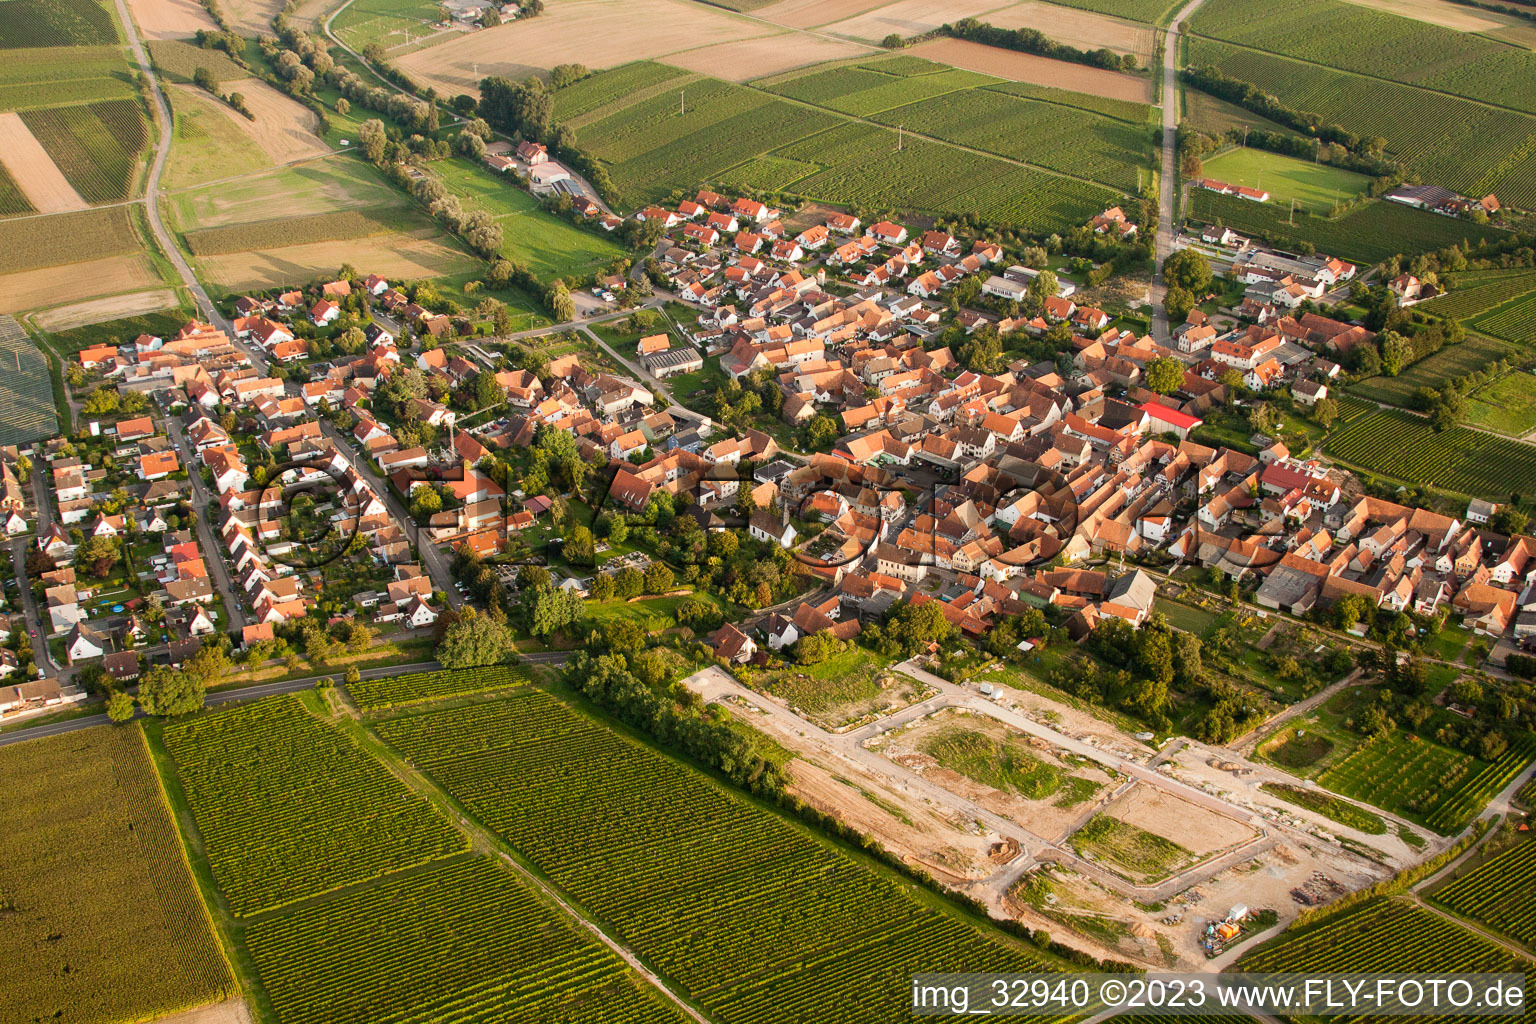 Drone image of Impflingen in the state Rhineland-Palatinate, Germany